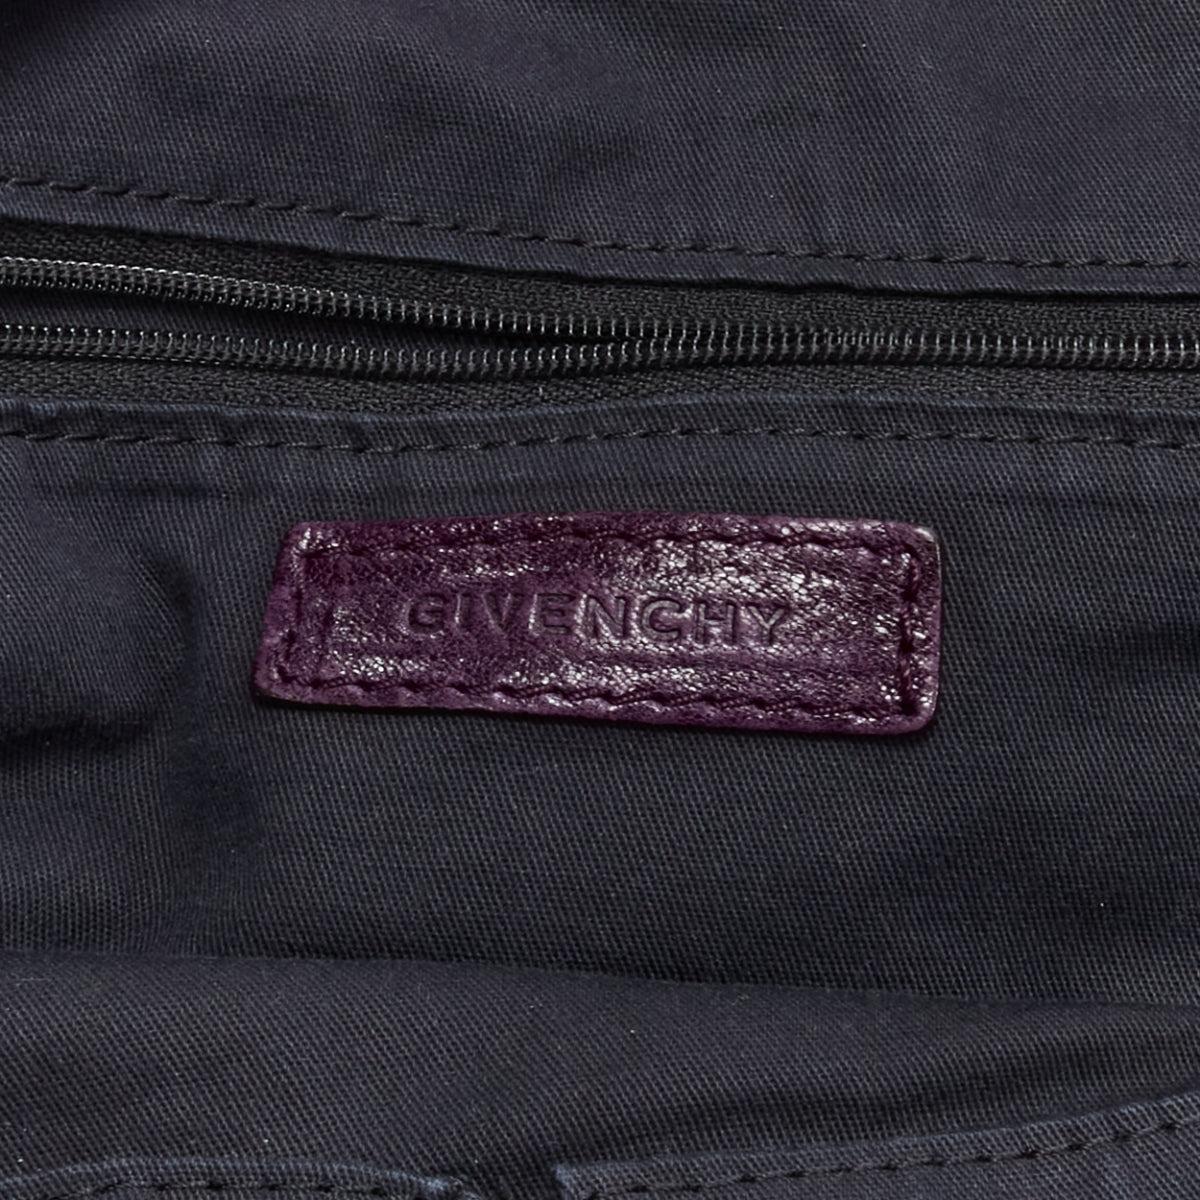 GIVENCHY Nightingale dark purple leather SHW top handle satchel bag 6